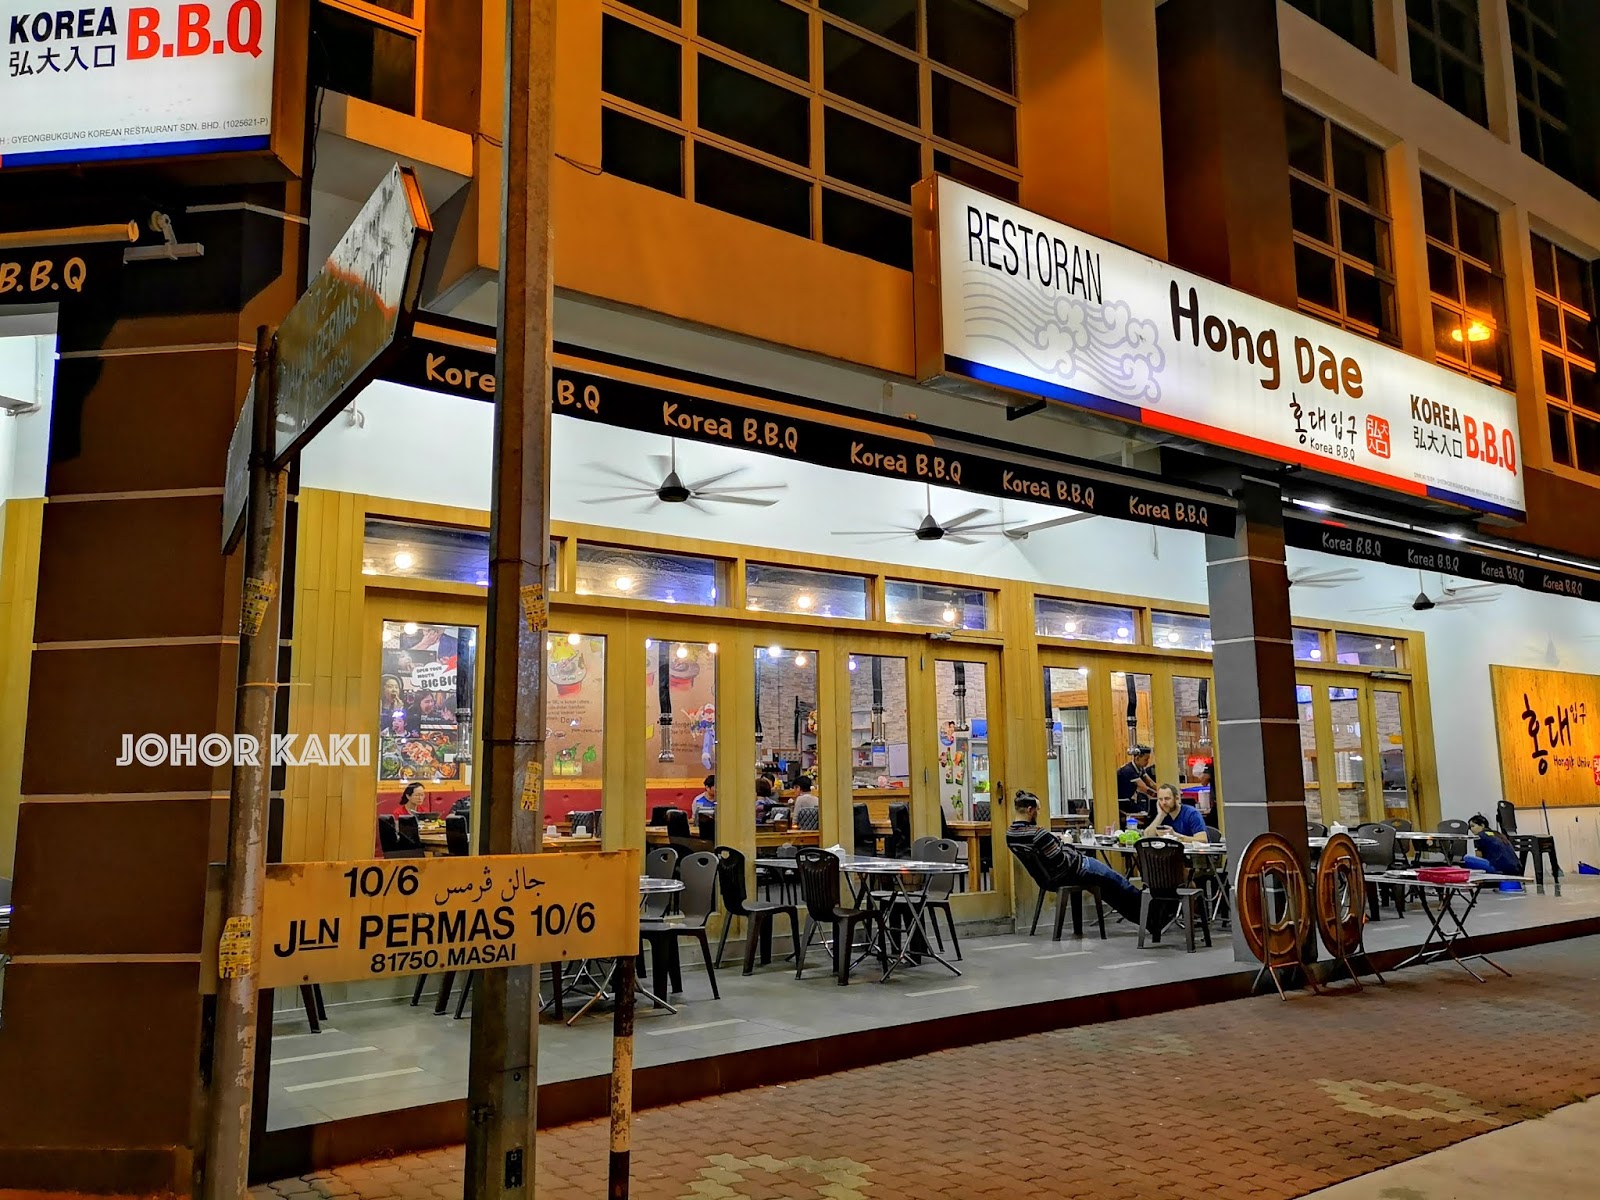 Hong Dae Korean BBQ @ Permas Jaya in Johor Bahru |Tony Johor Kaki ...